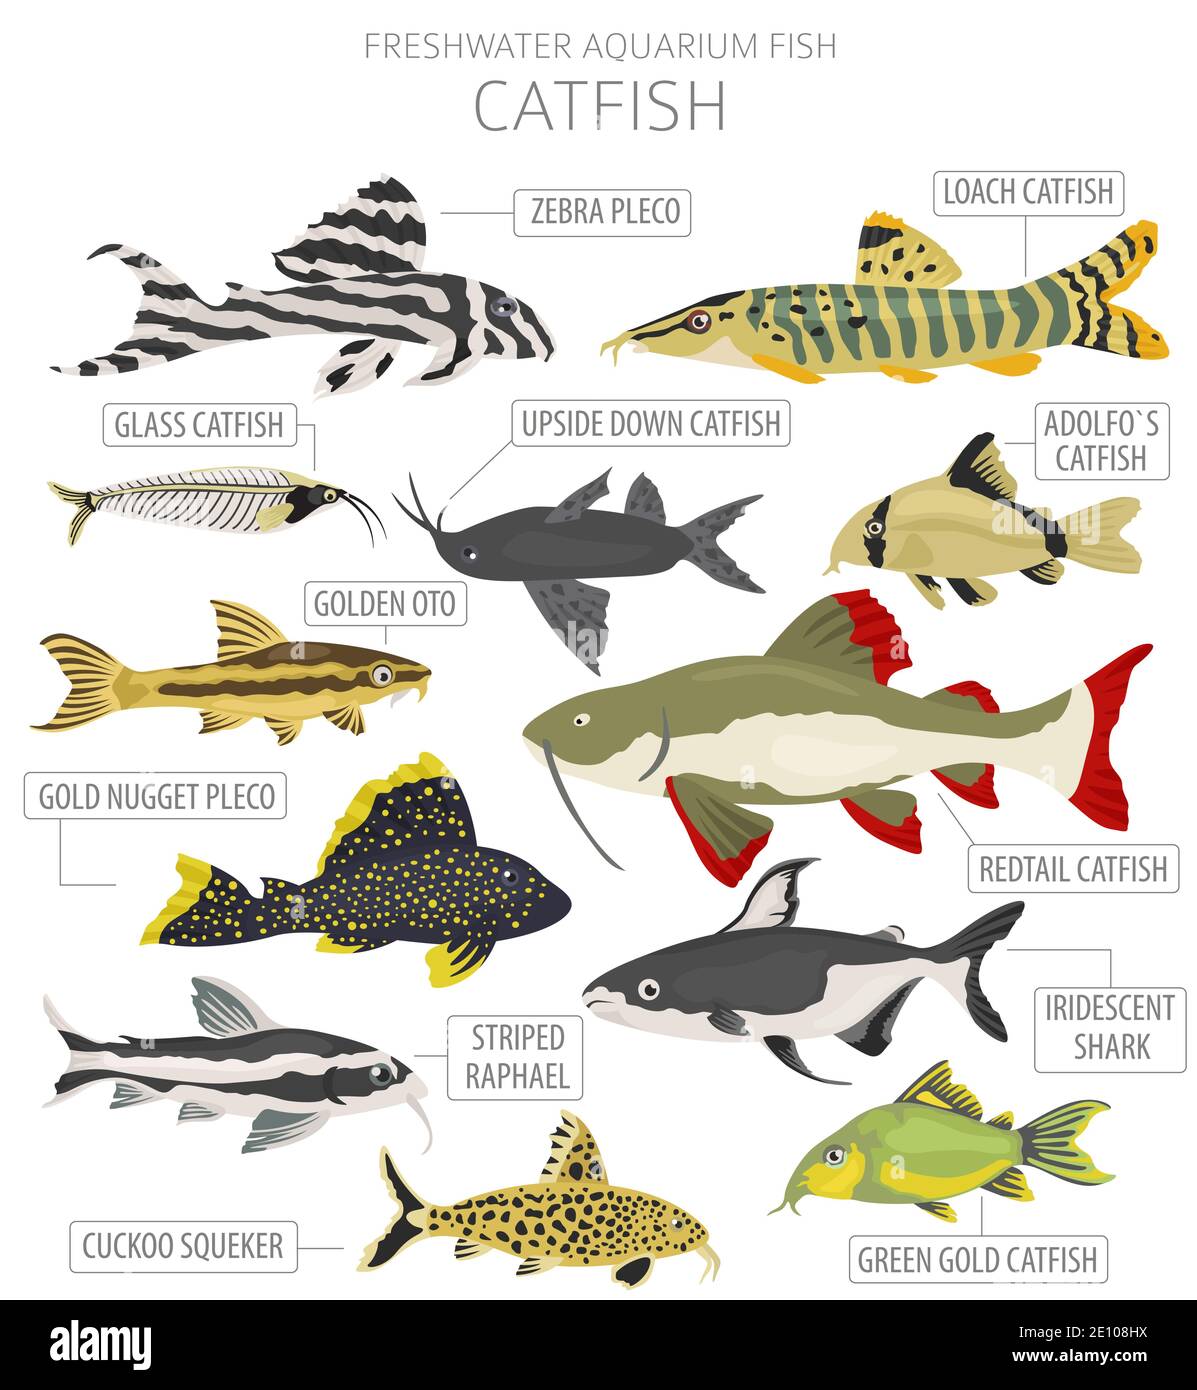 Catfish aquarium Cut Out Stock Images & Pictures - Alamy